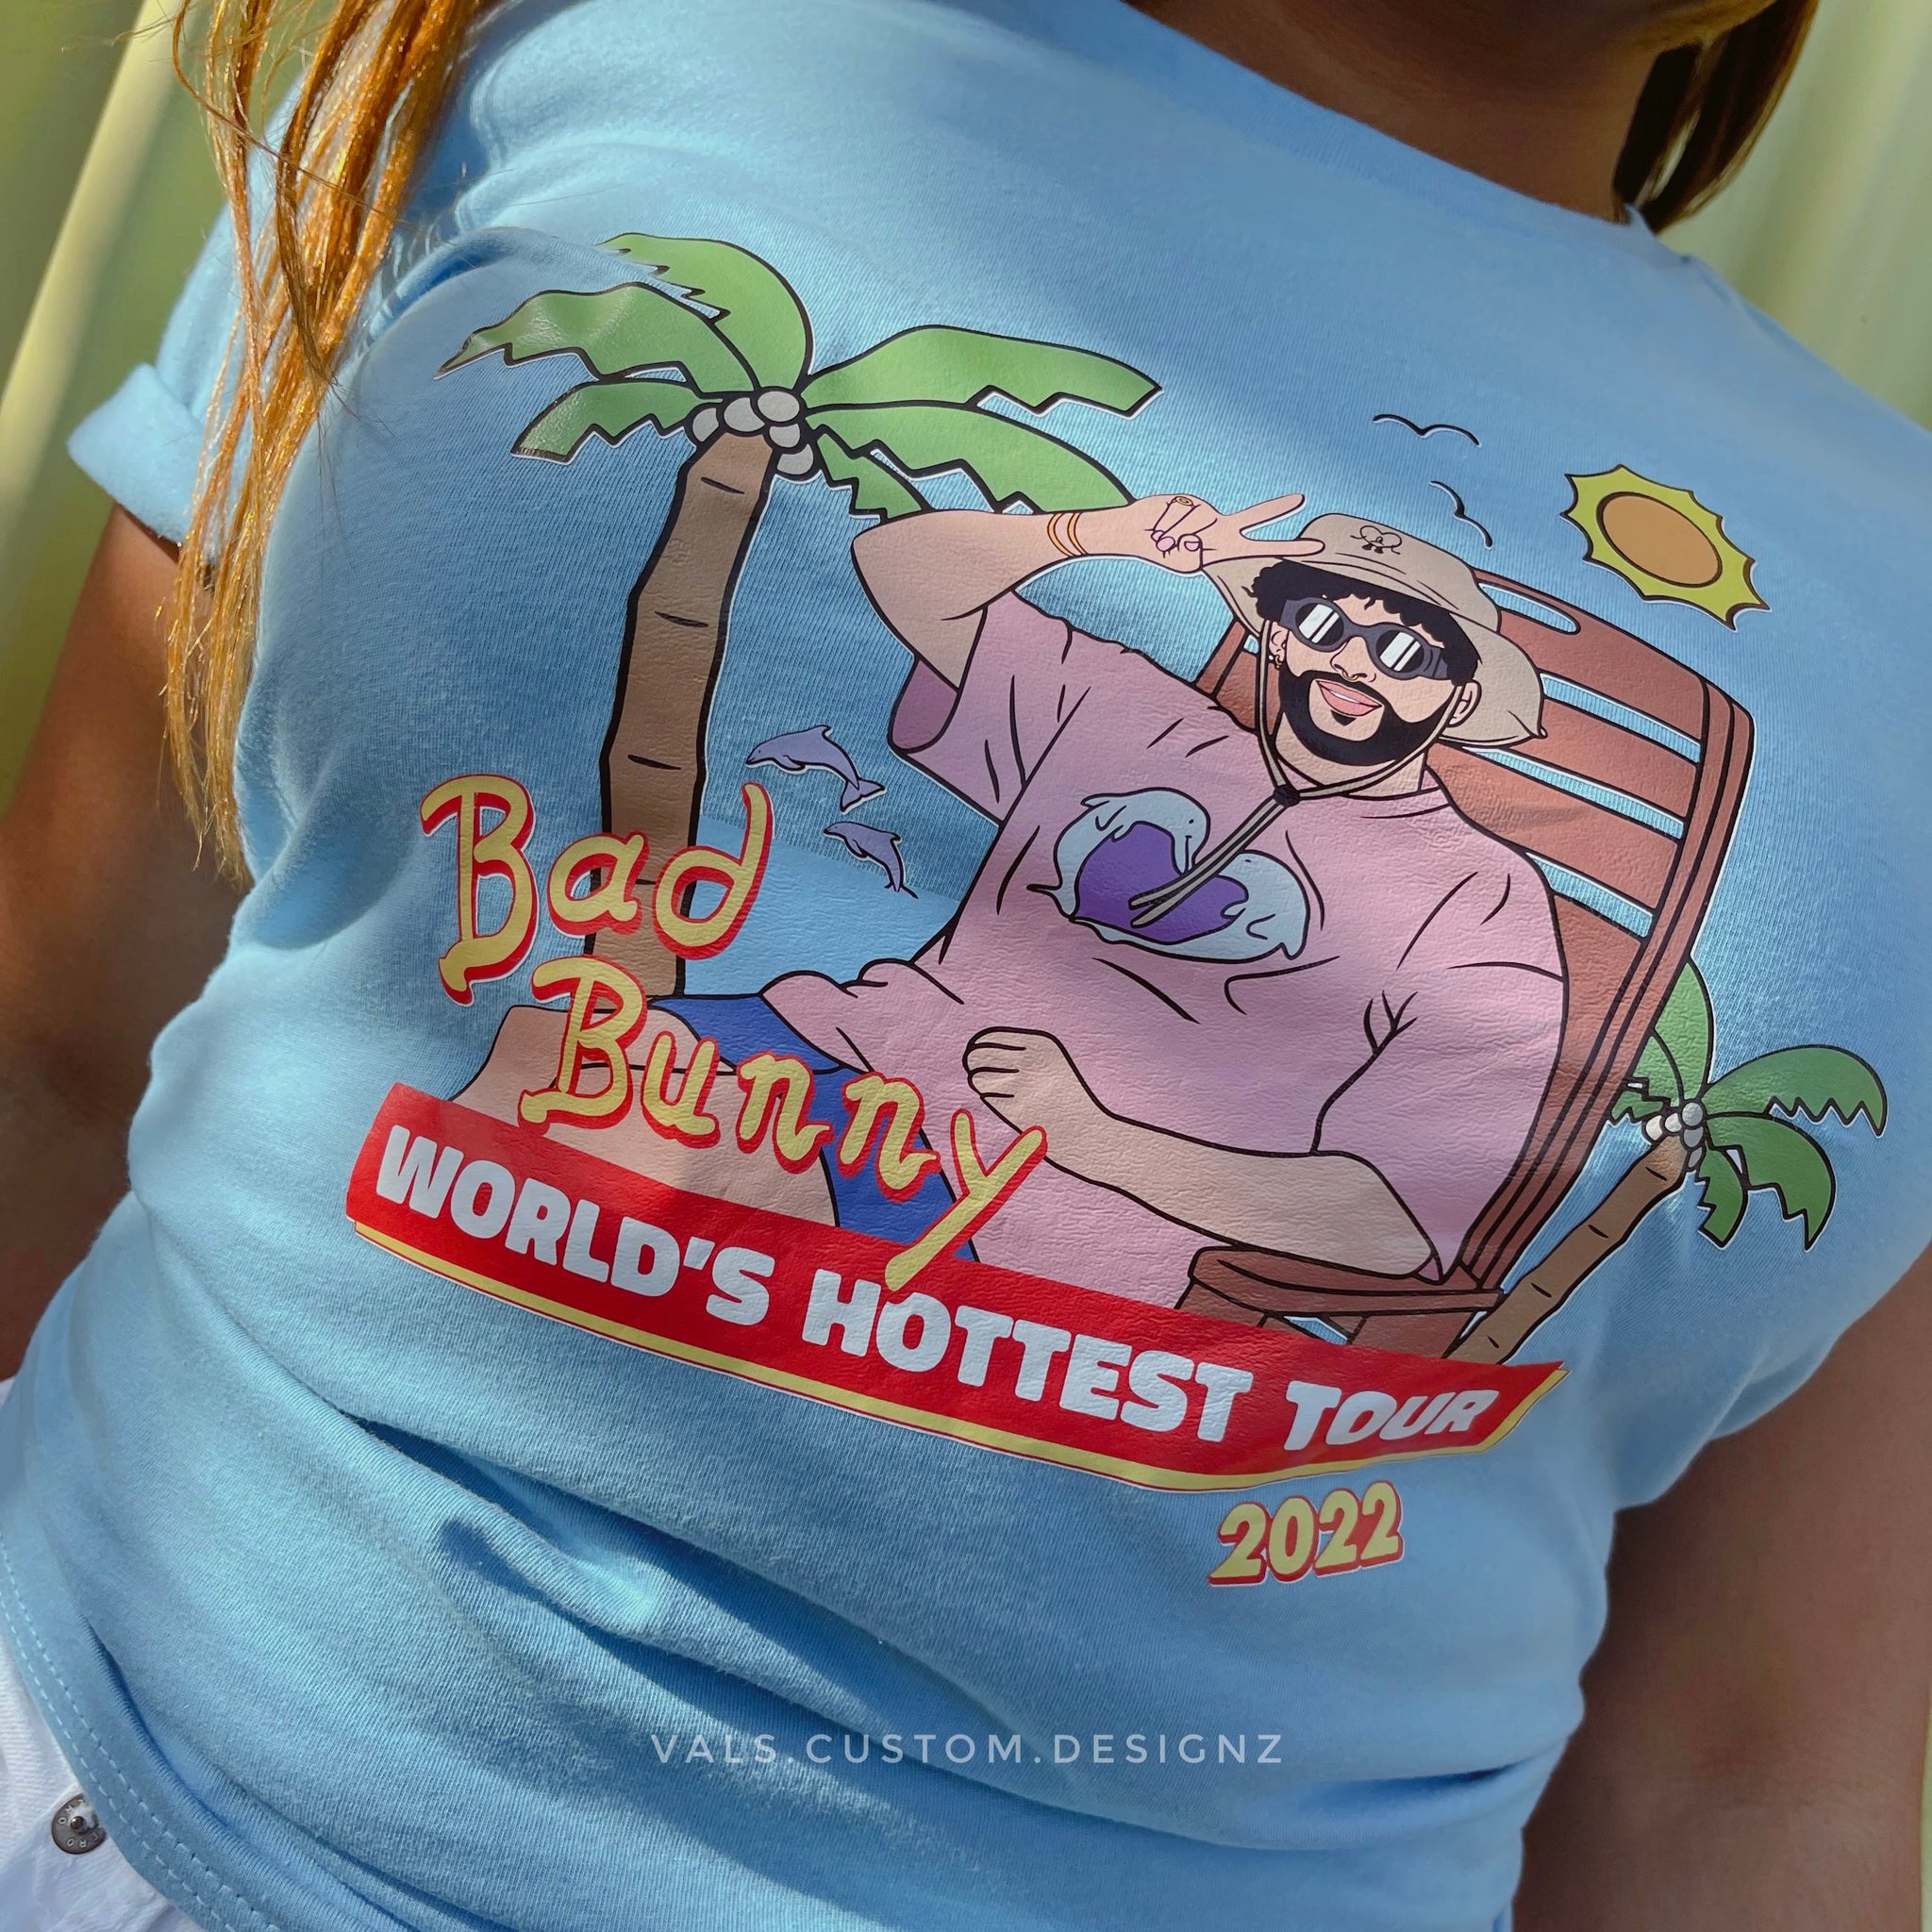 World's Hottest Tour T-shirt – Val's Custom Designz